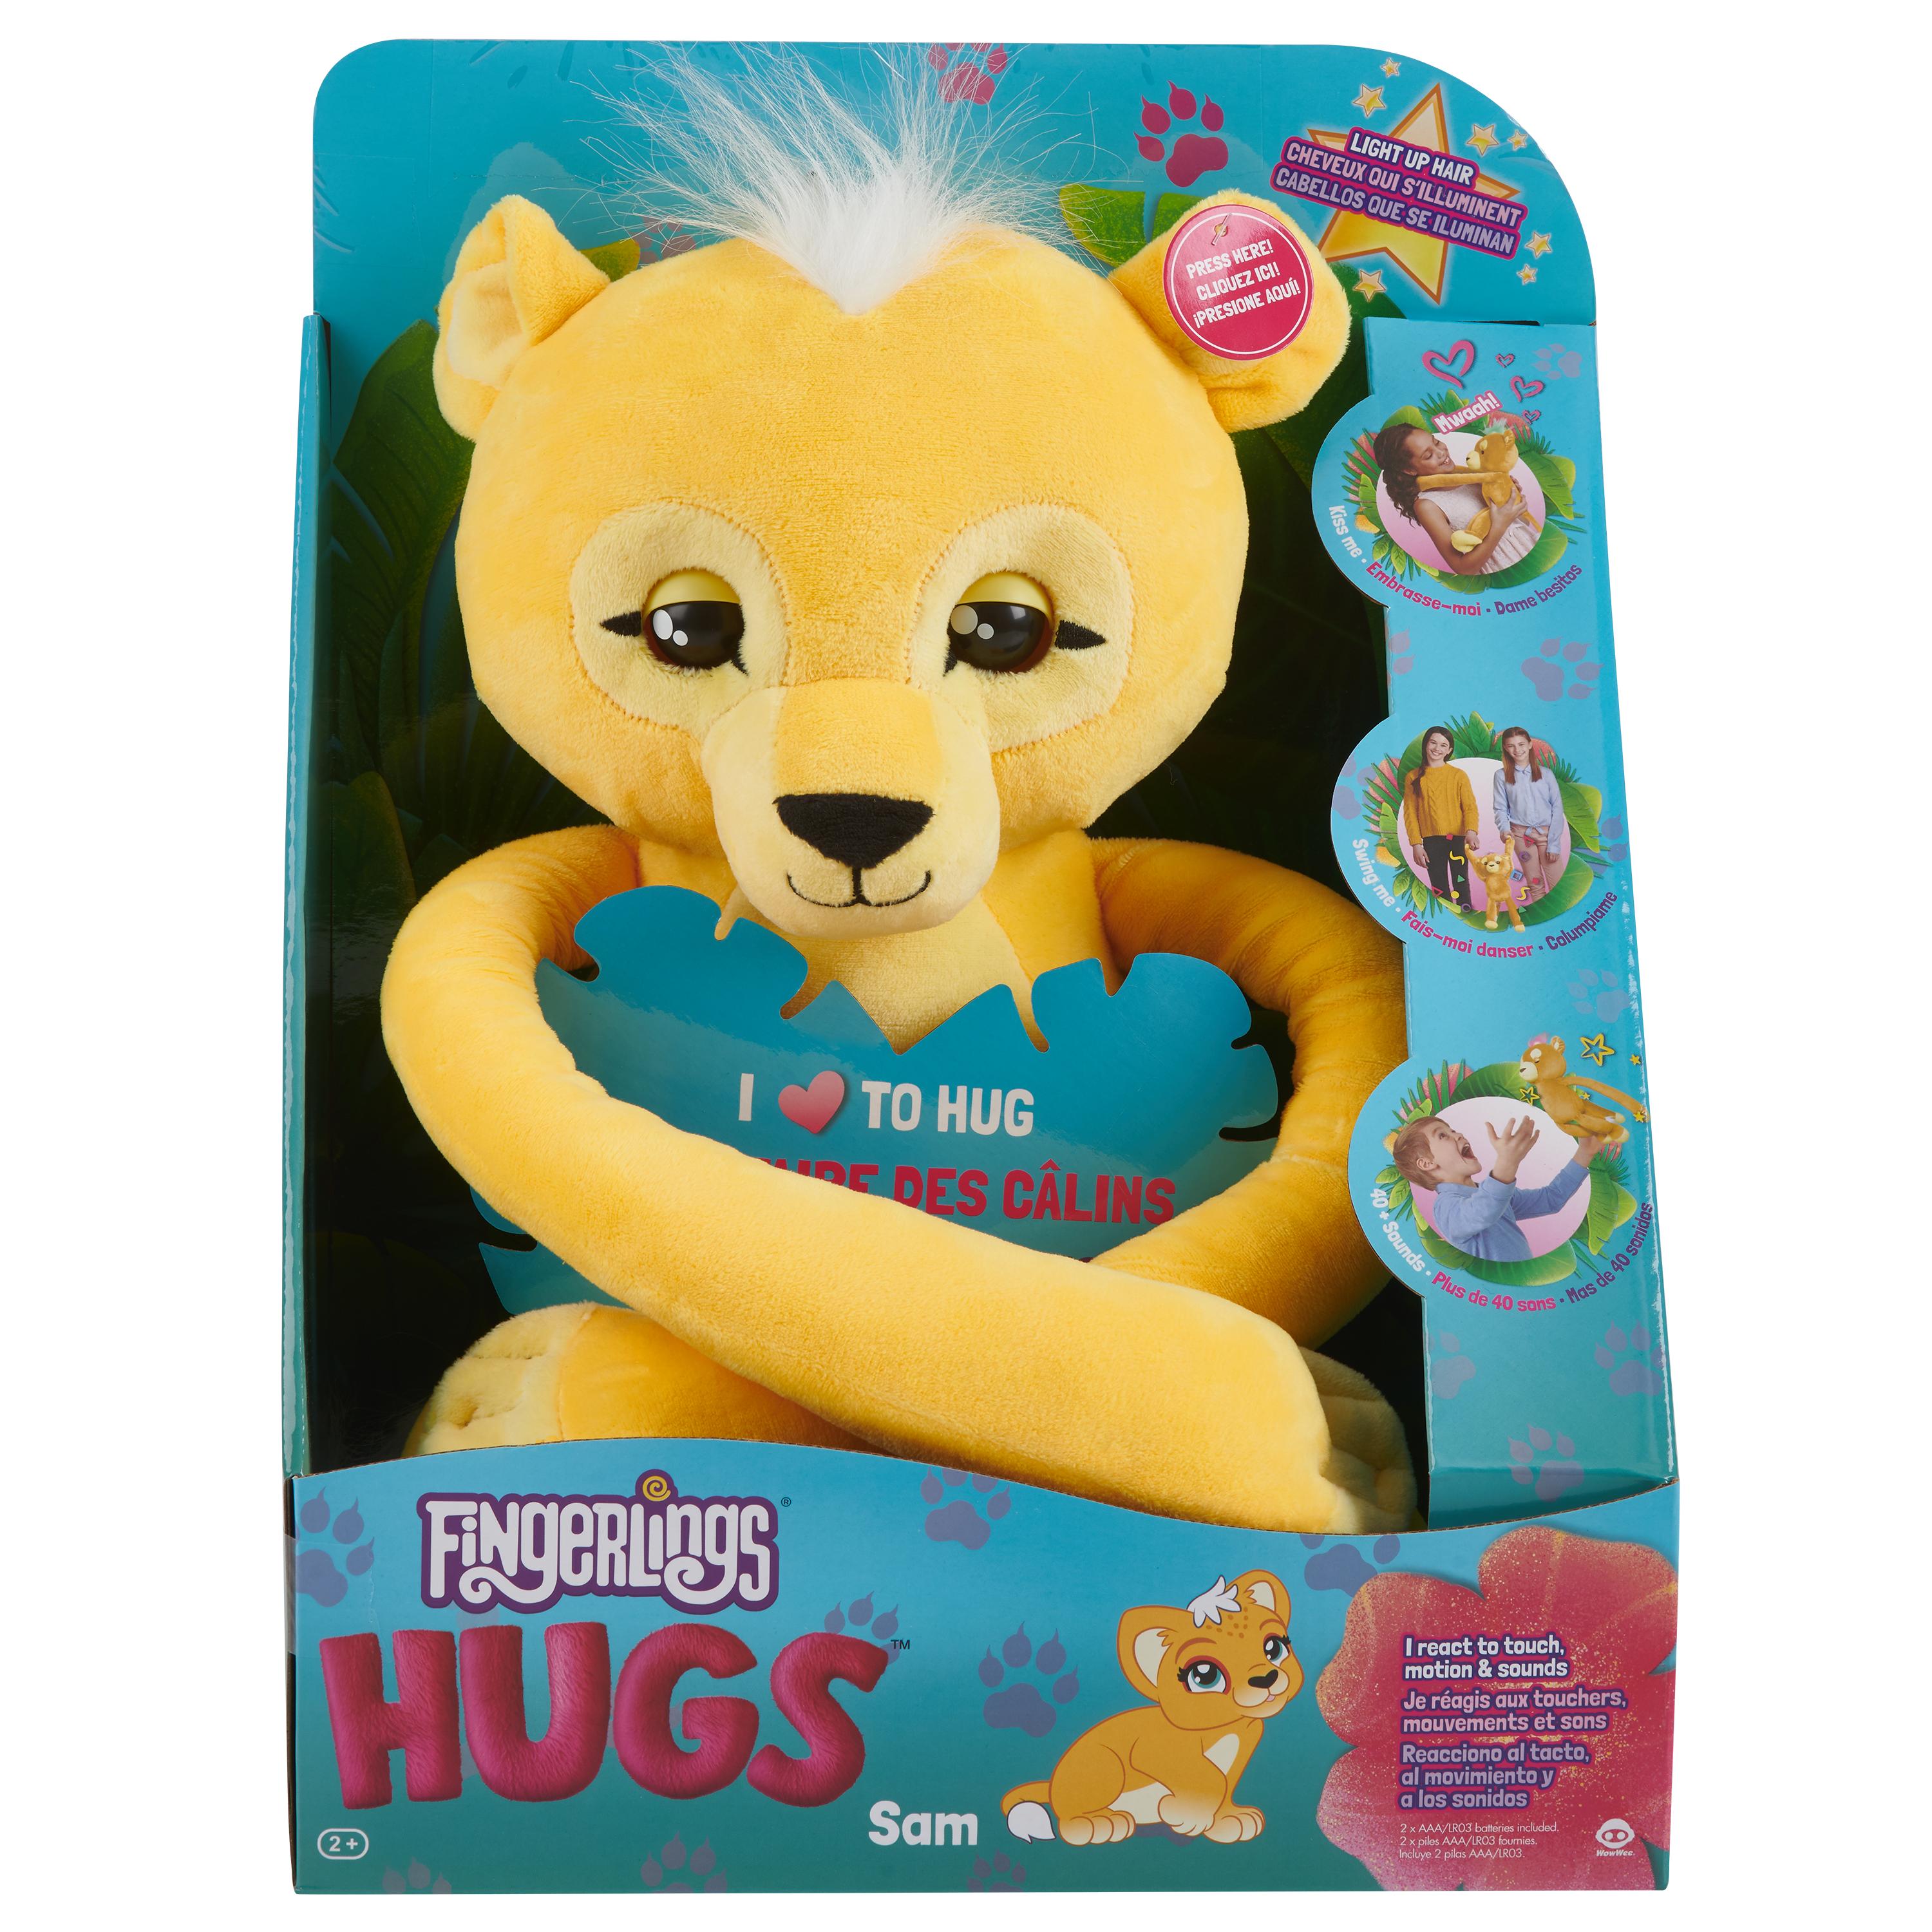 WowWee Fingerlings Hugs - Sam (Yellow) - Interactive Plush Lion - image 7 of 8